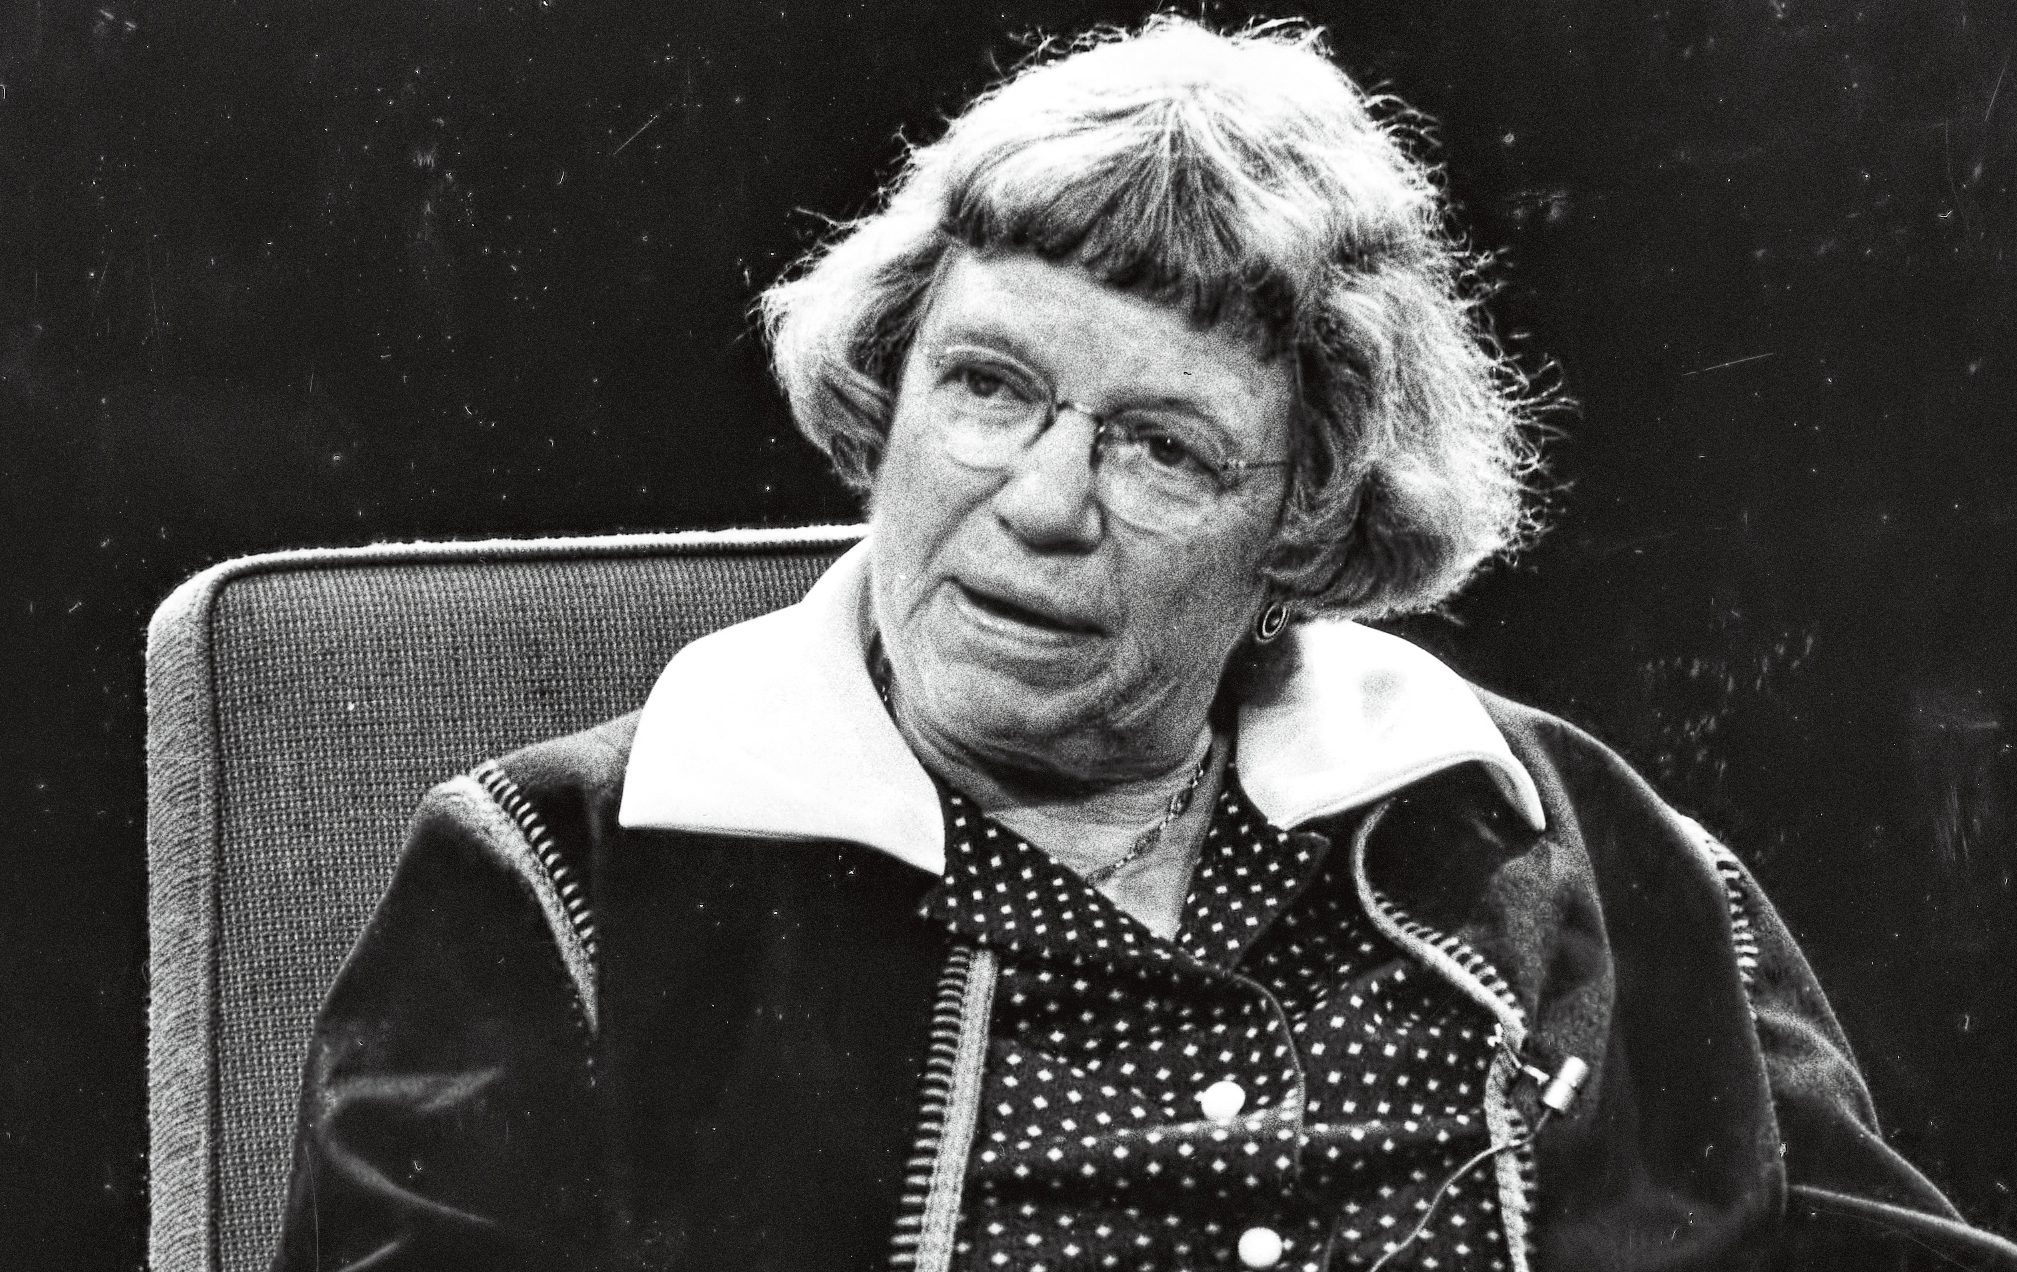 Cultural anthropologist Margaret Mead spoke about the pre- and postwar generation gap